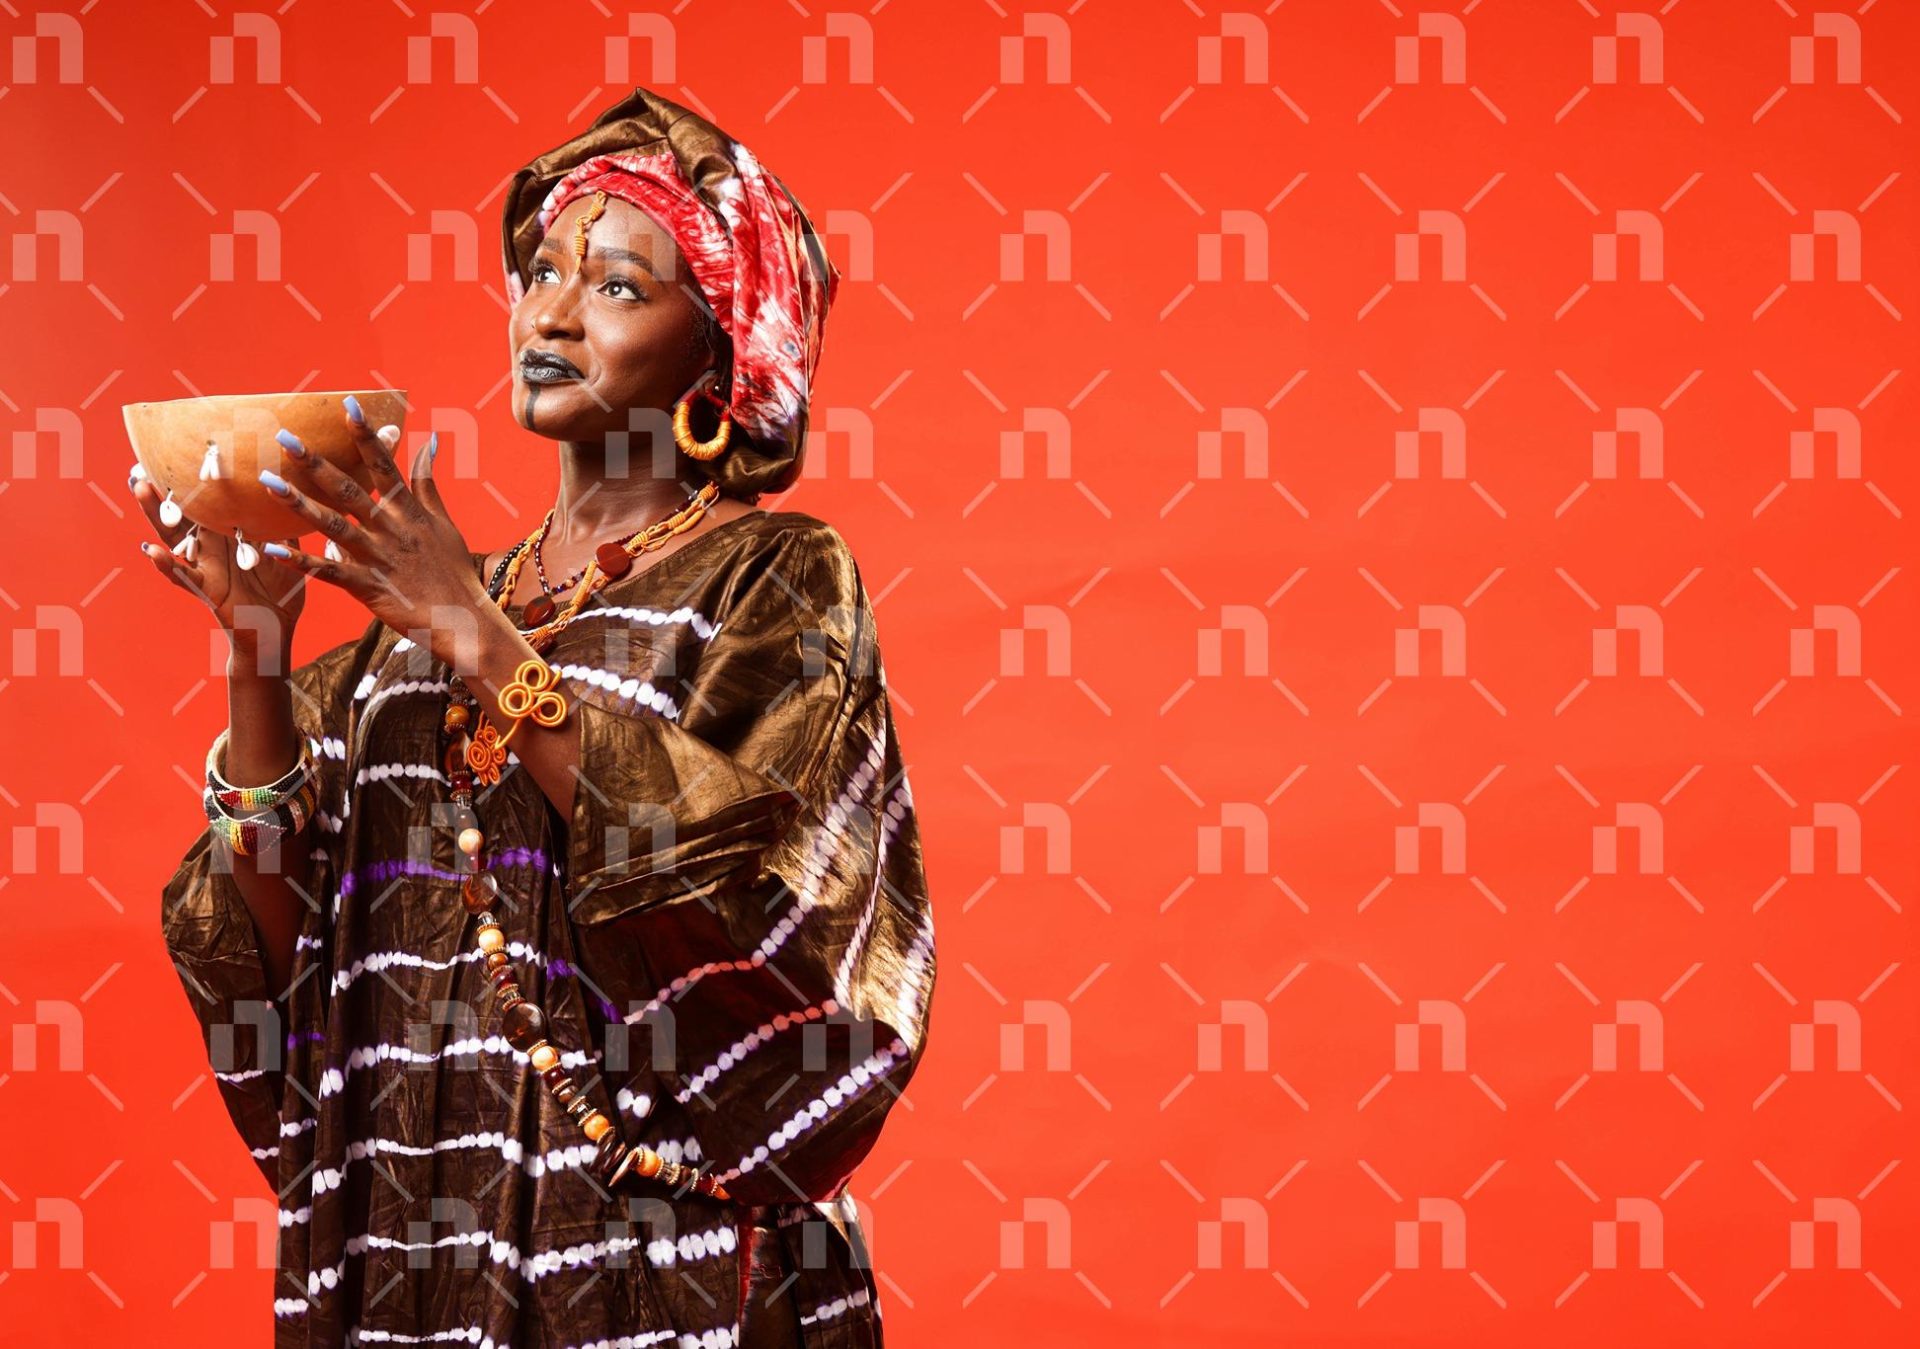 femme-en-tenue-senegalaise-tenant-une-calebasse